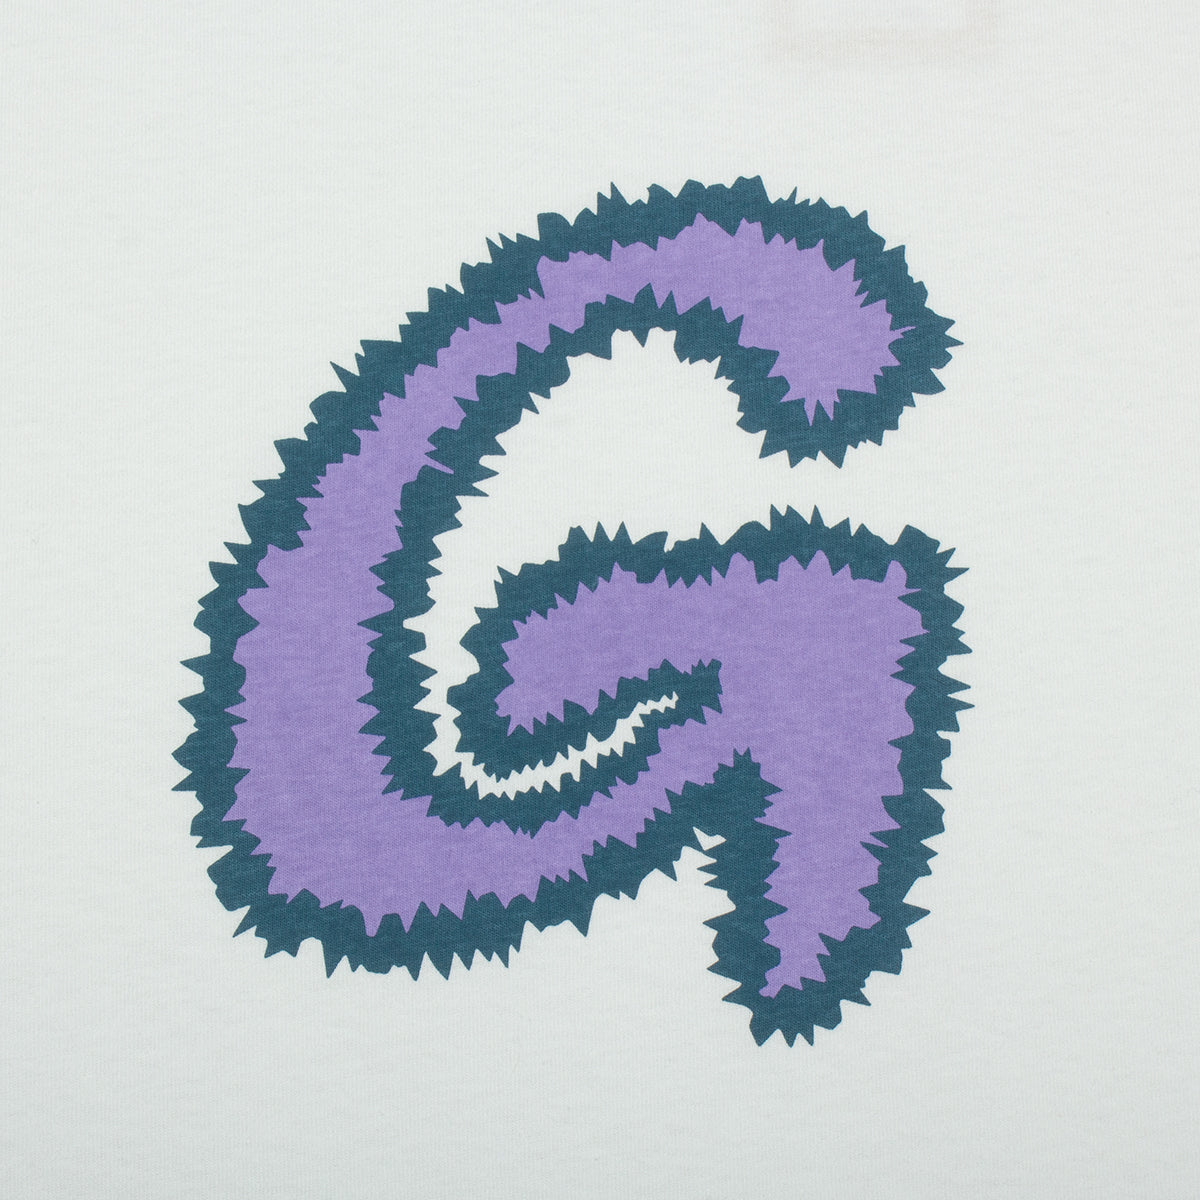 Gramicci Fuzzy G-Logo T-Shirt Style # G3SU-T042 Color : White